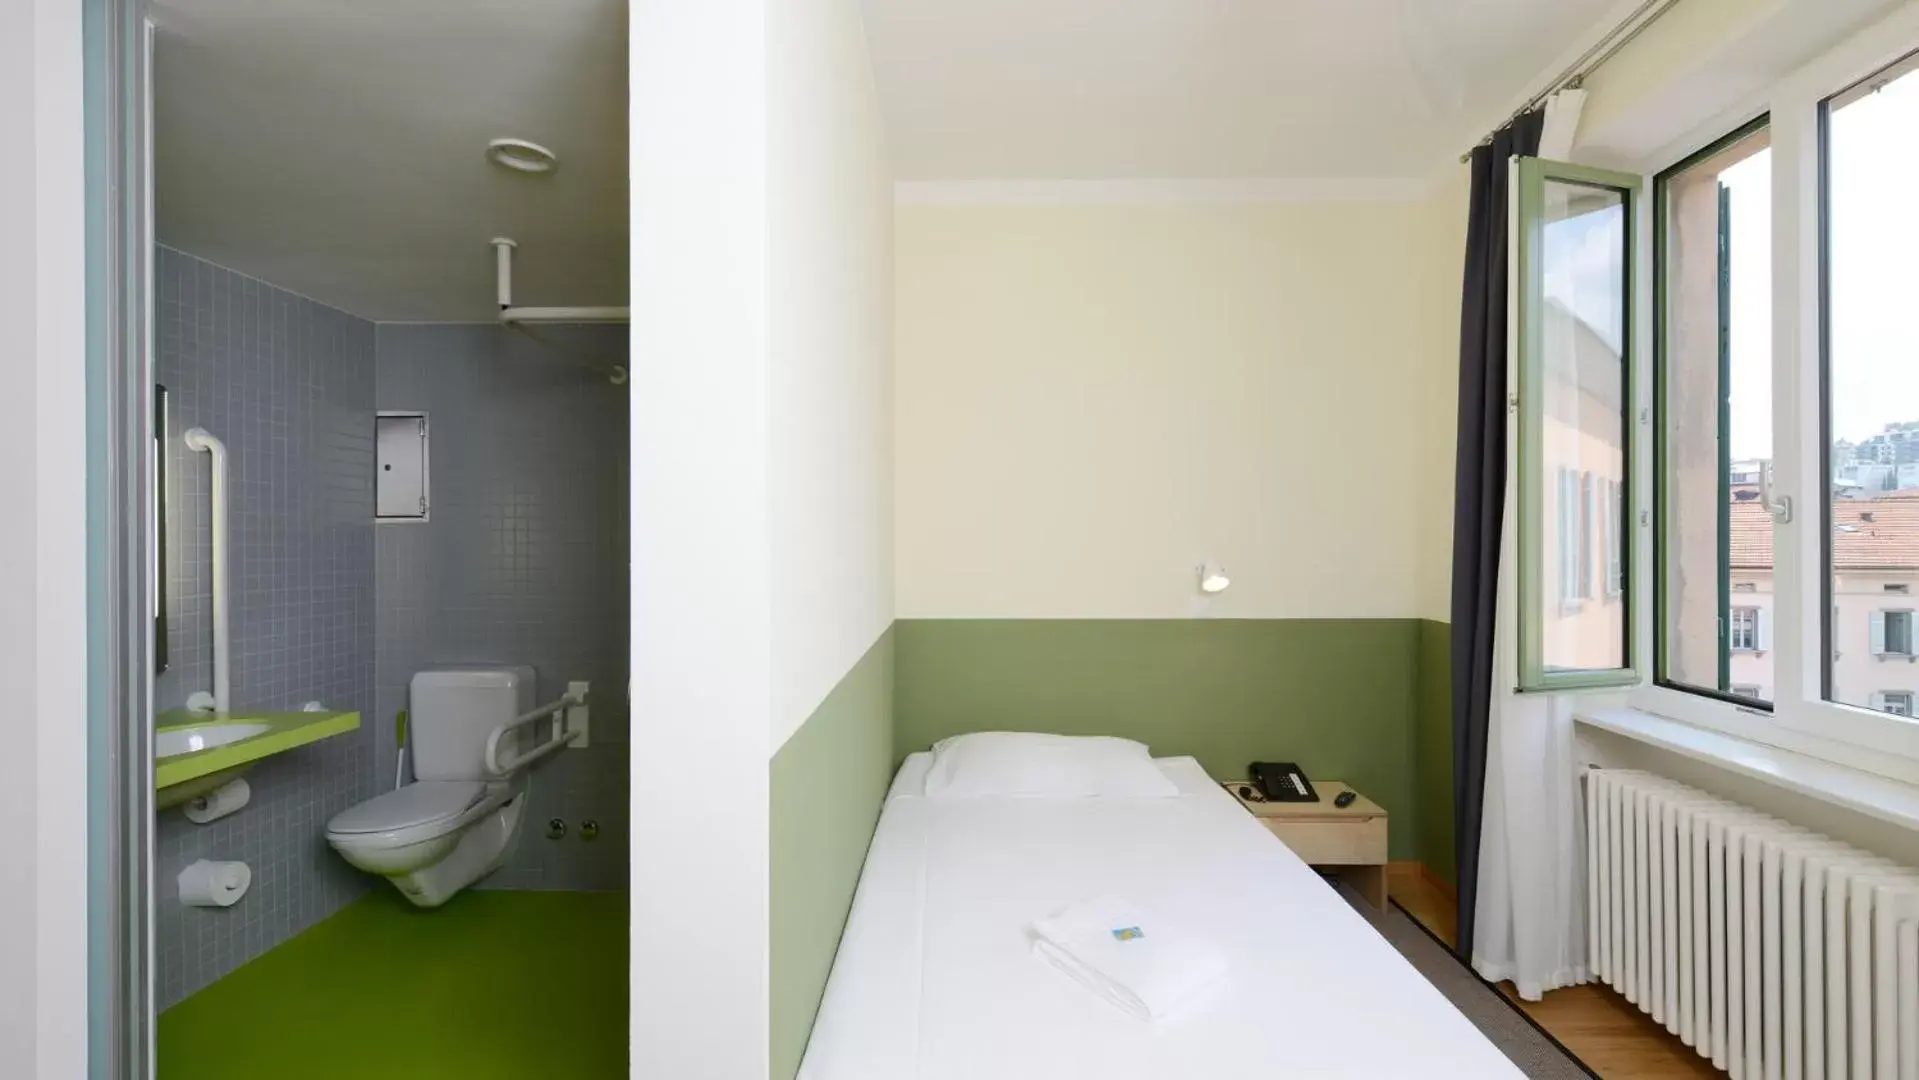 Photo of the whole room, Bathroom in Hotel Pestalozzi Lugano